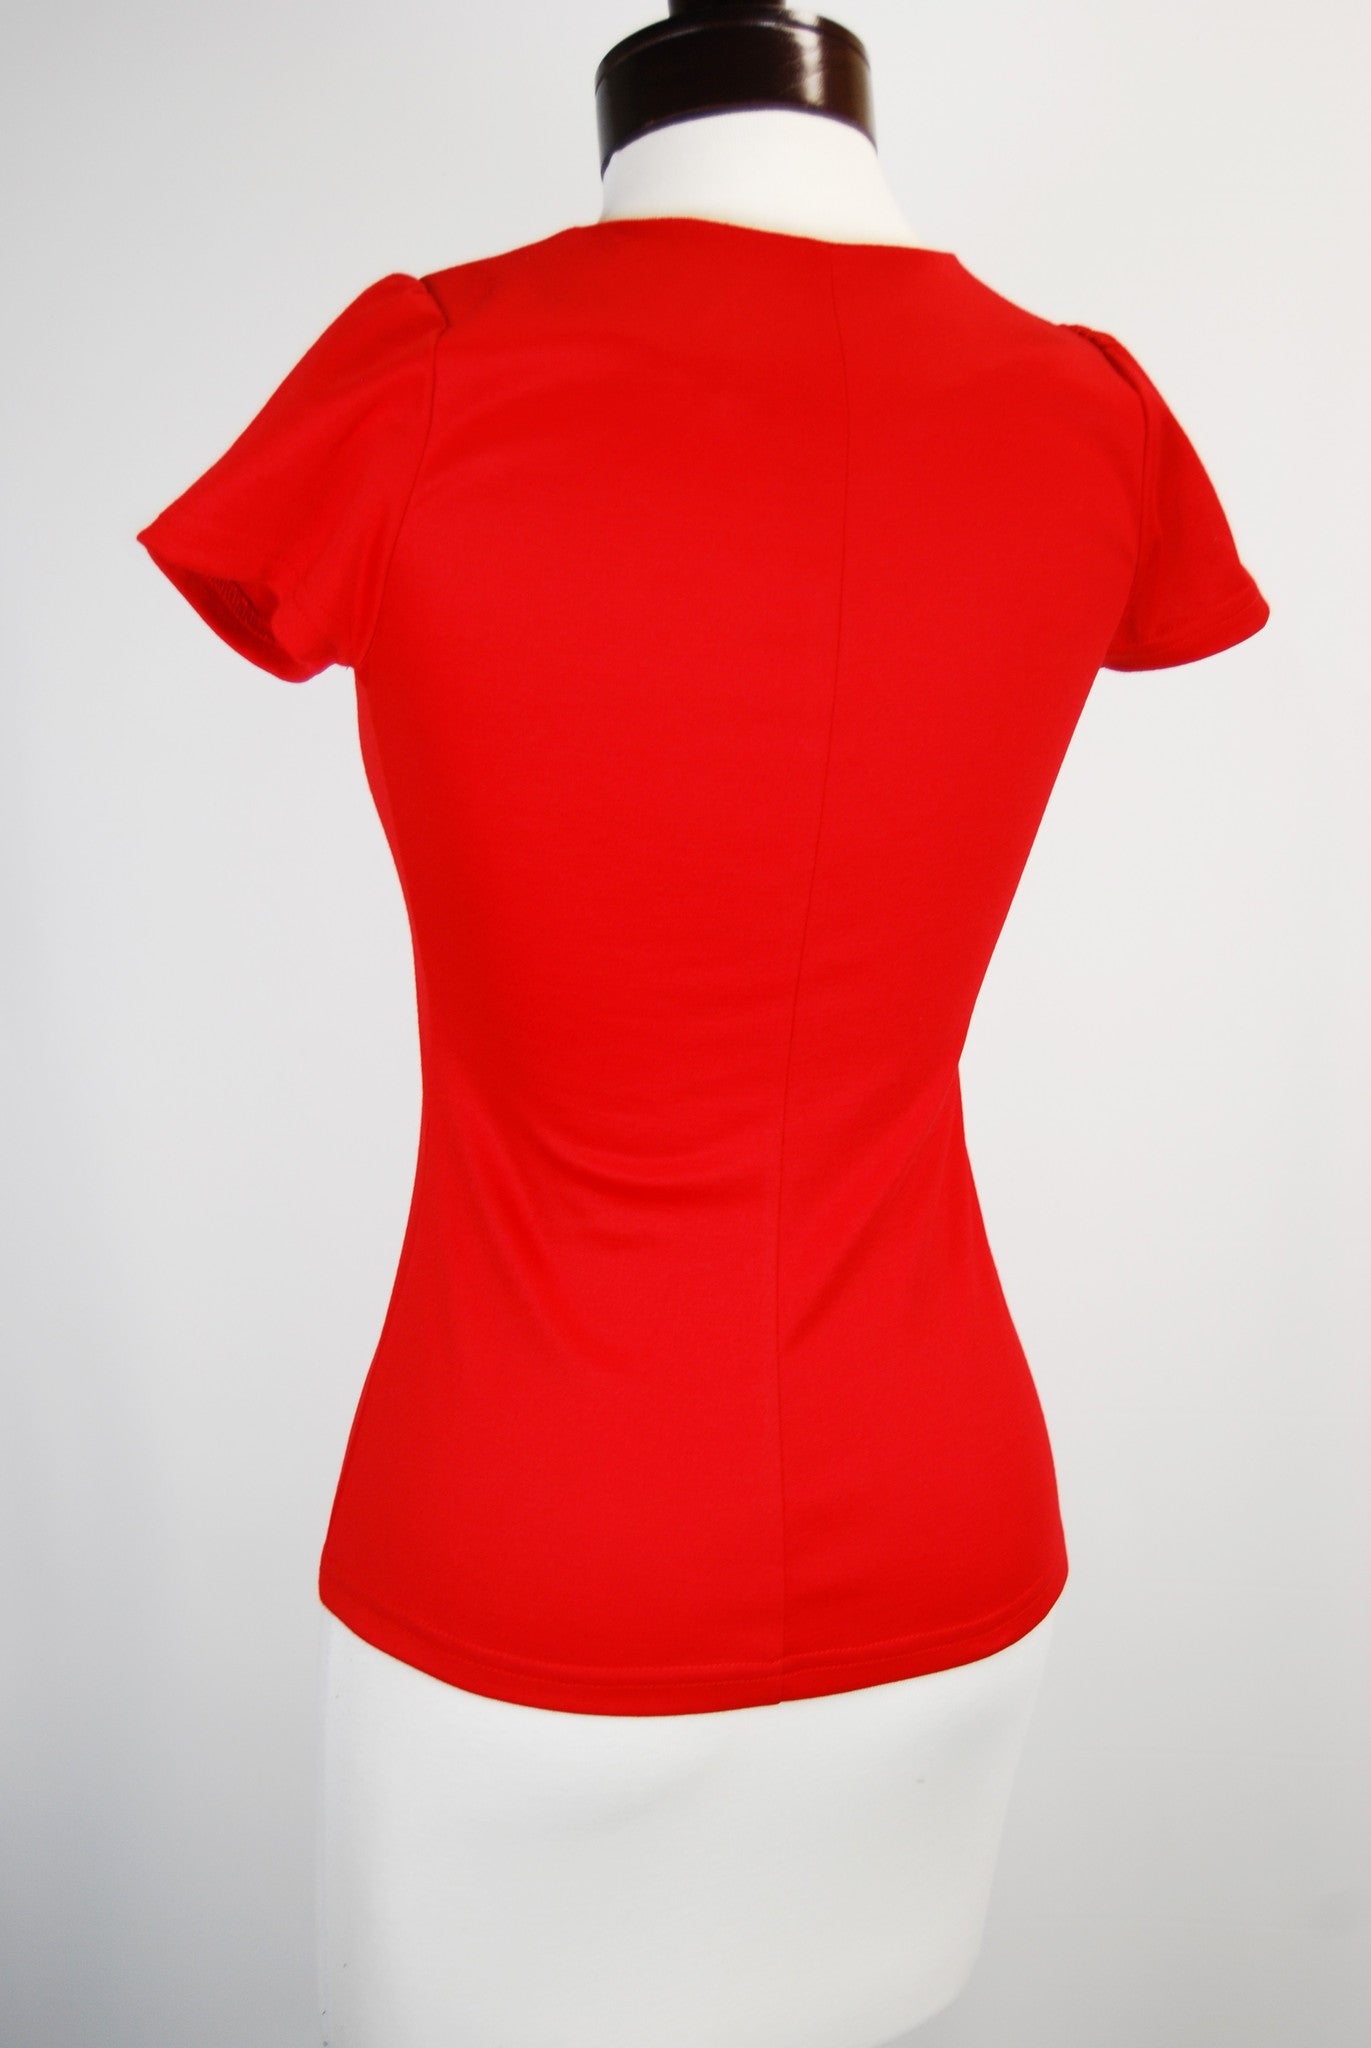 Red Dress Shoppe Boutique: Retro Vintage Clothing